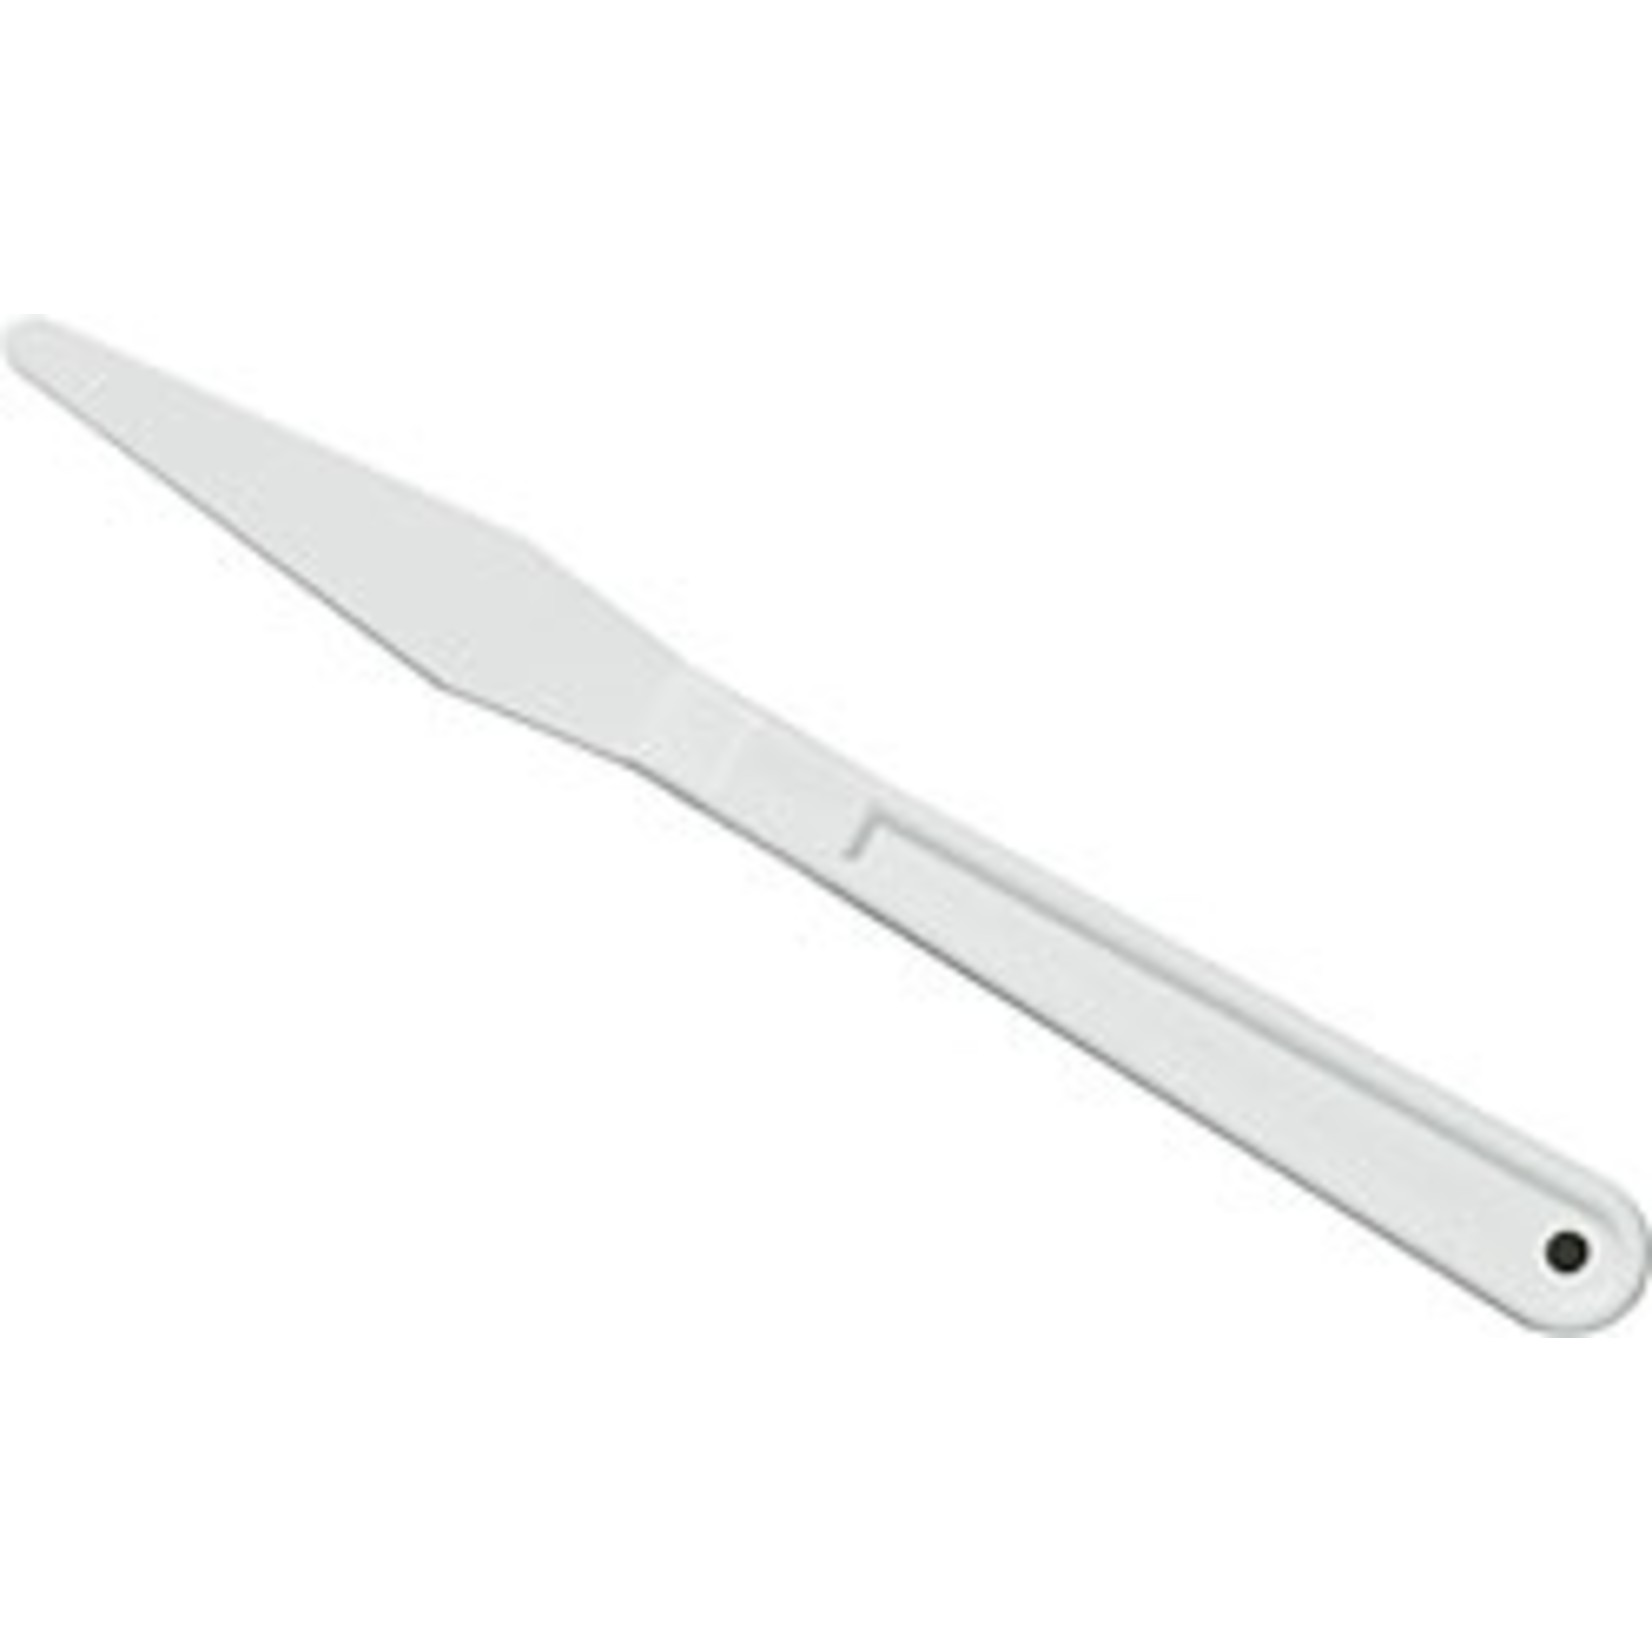 PRO ART PLASTIC PALETTE KNIFE   3 INCH OFFSET TROWEL    6960-4